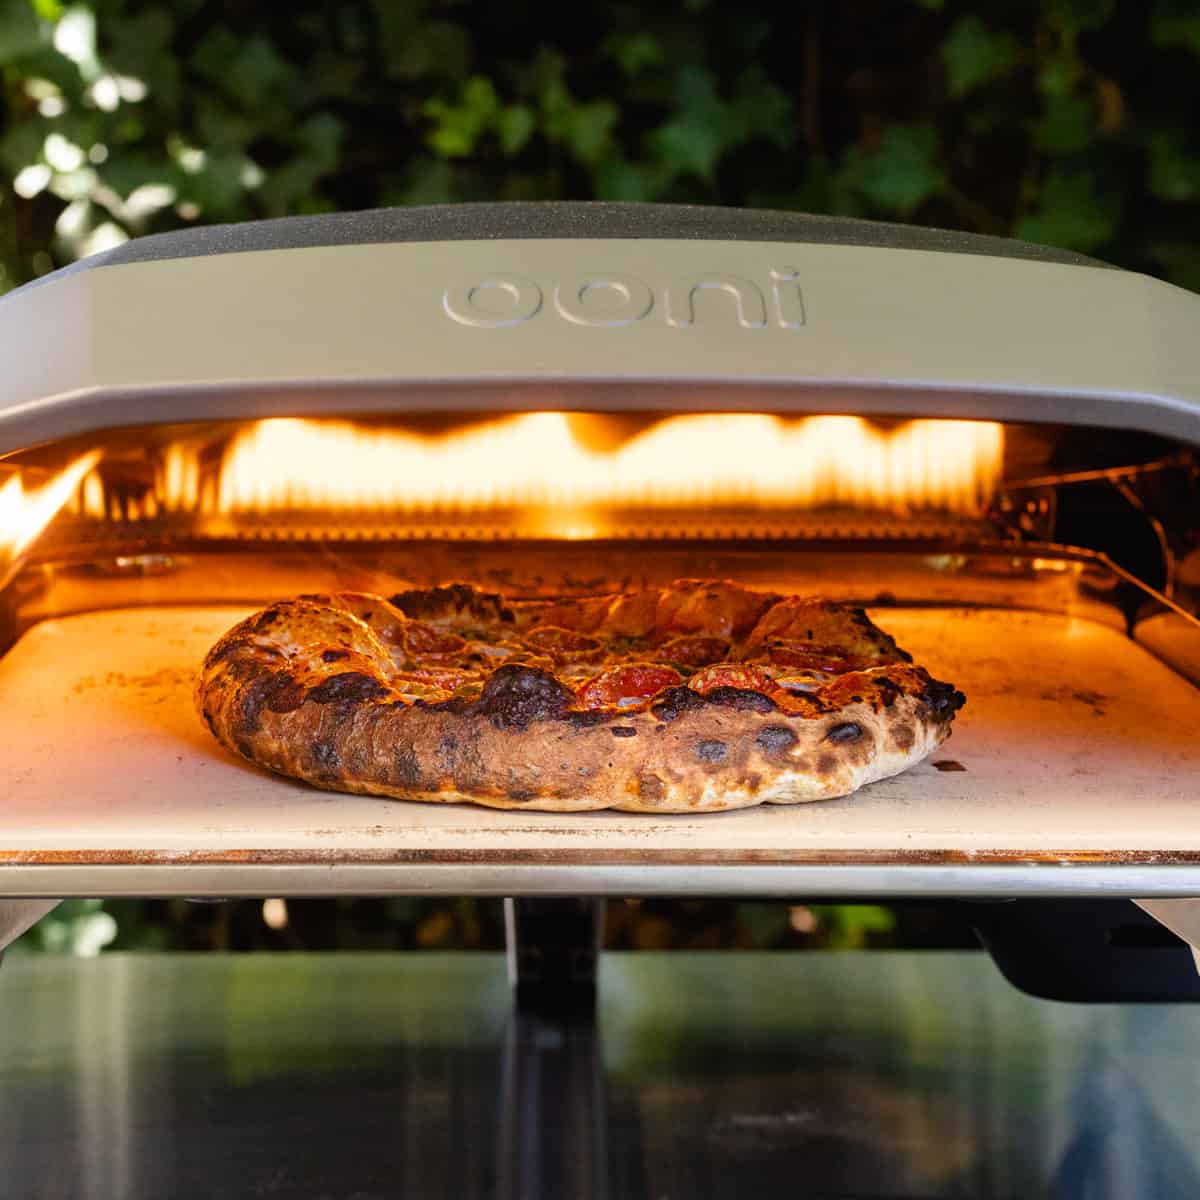 https://midwestfoodieblog.com/wp-content/uploads/2021/09/FINAL-ooni-pizza-oven-1-5.jpg